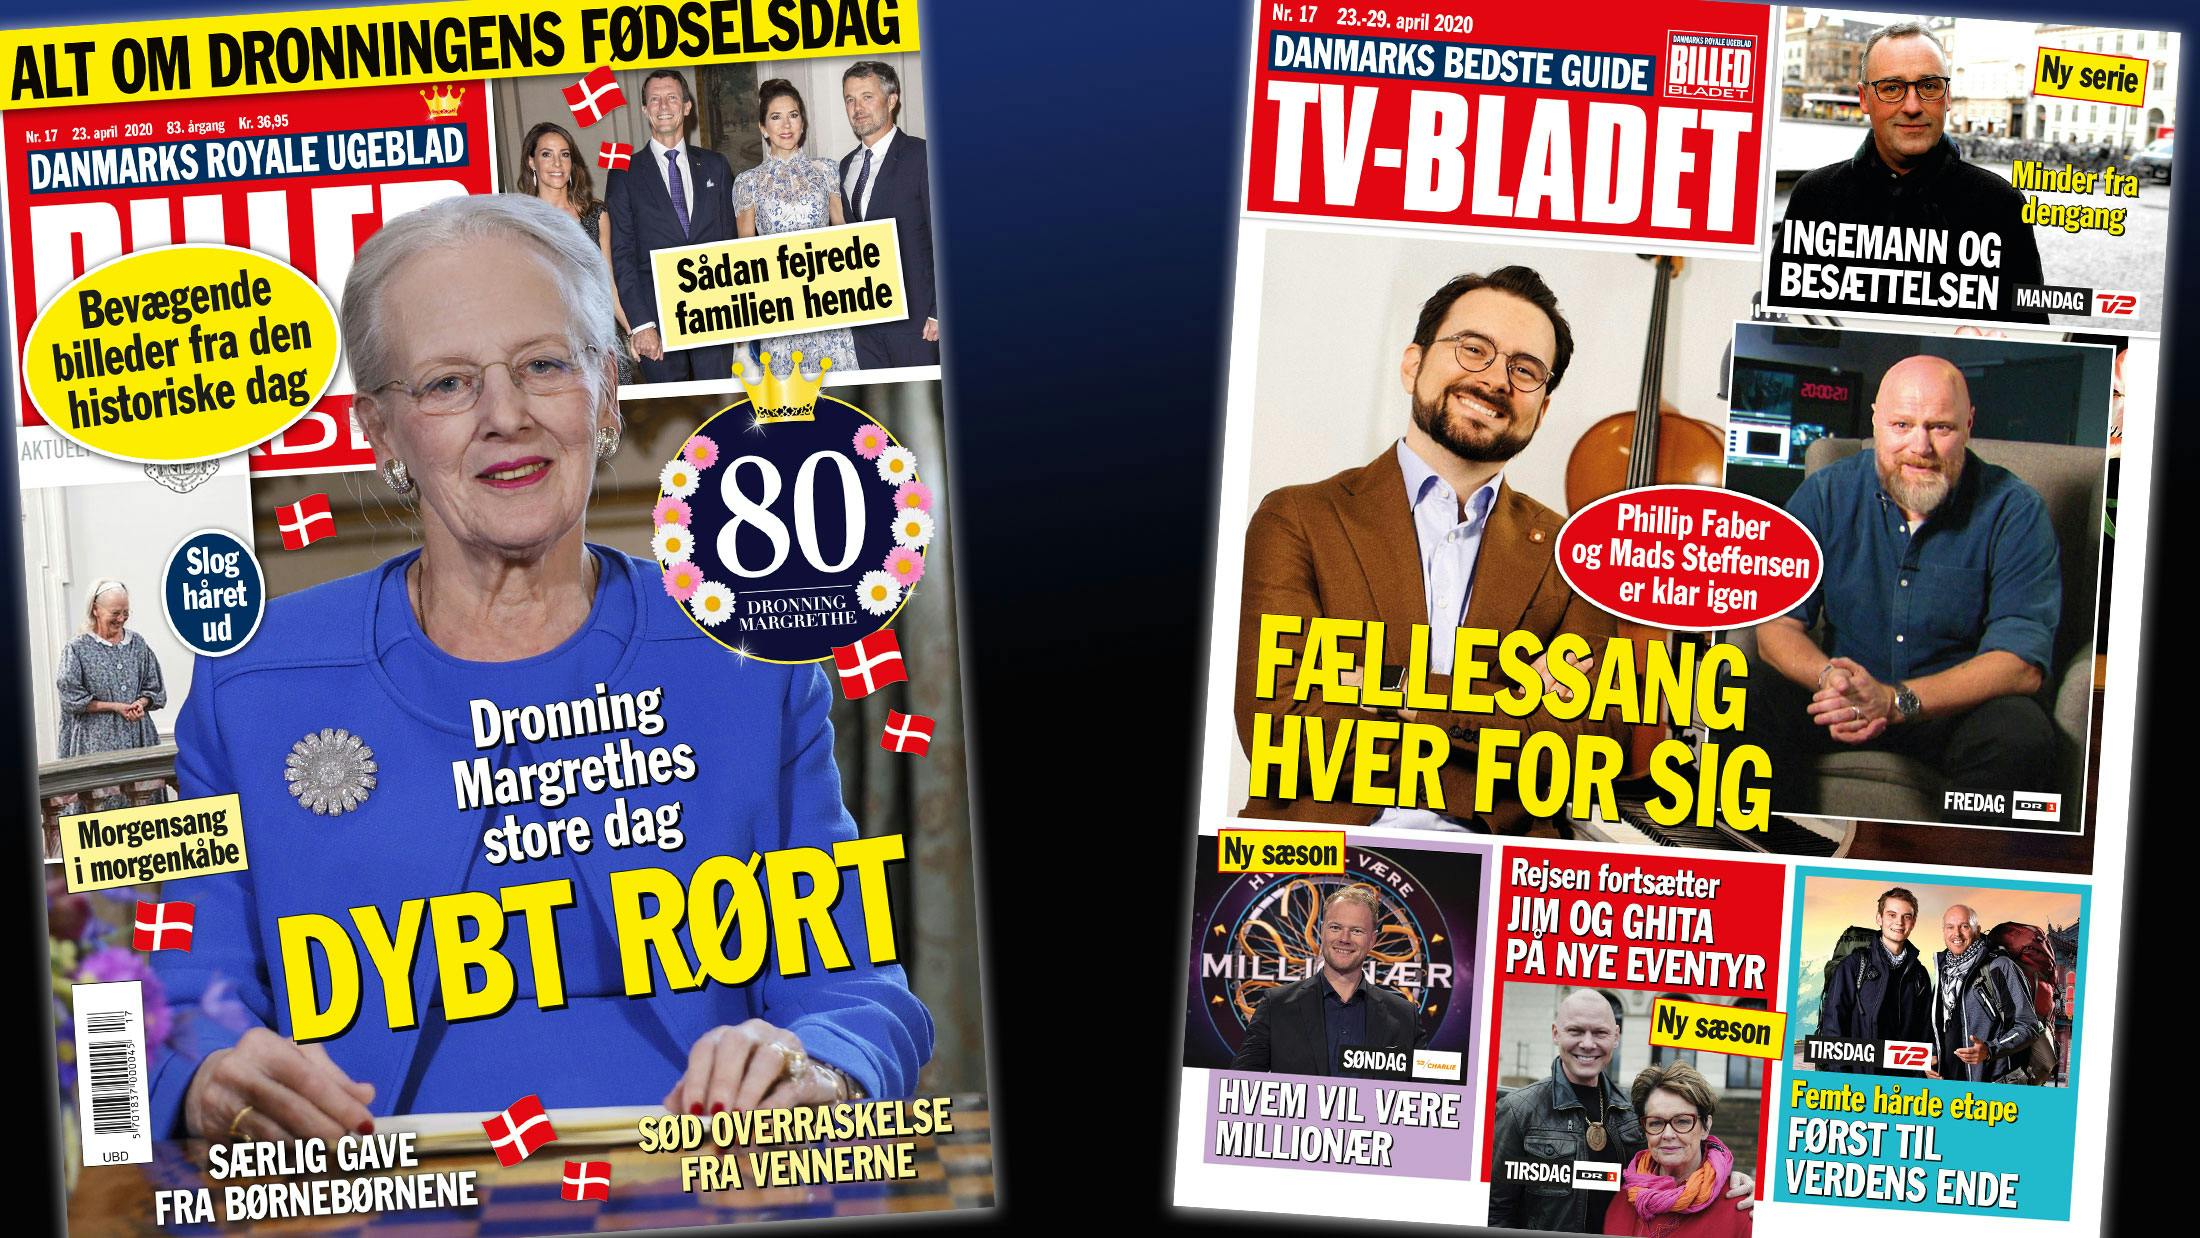 https://imgix.billedbladet.dk/media/article/webgrafik_bb17-forsider.jpg